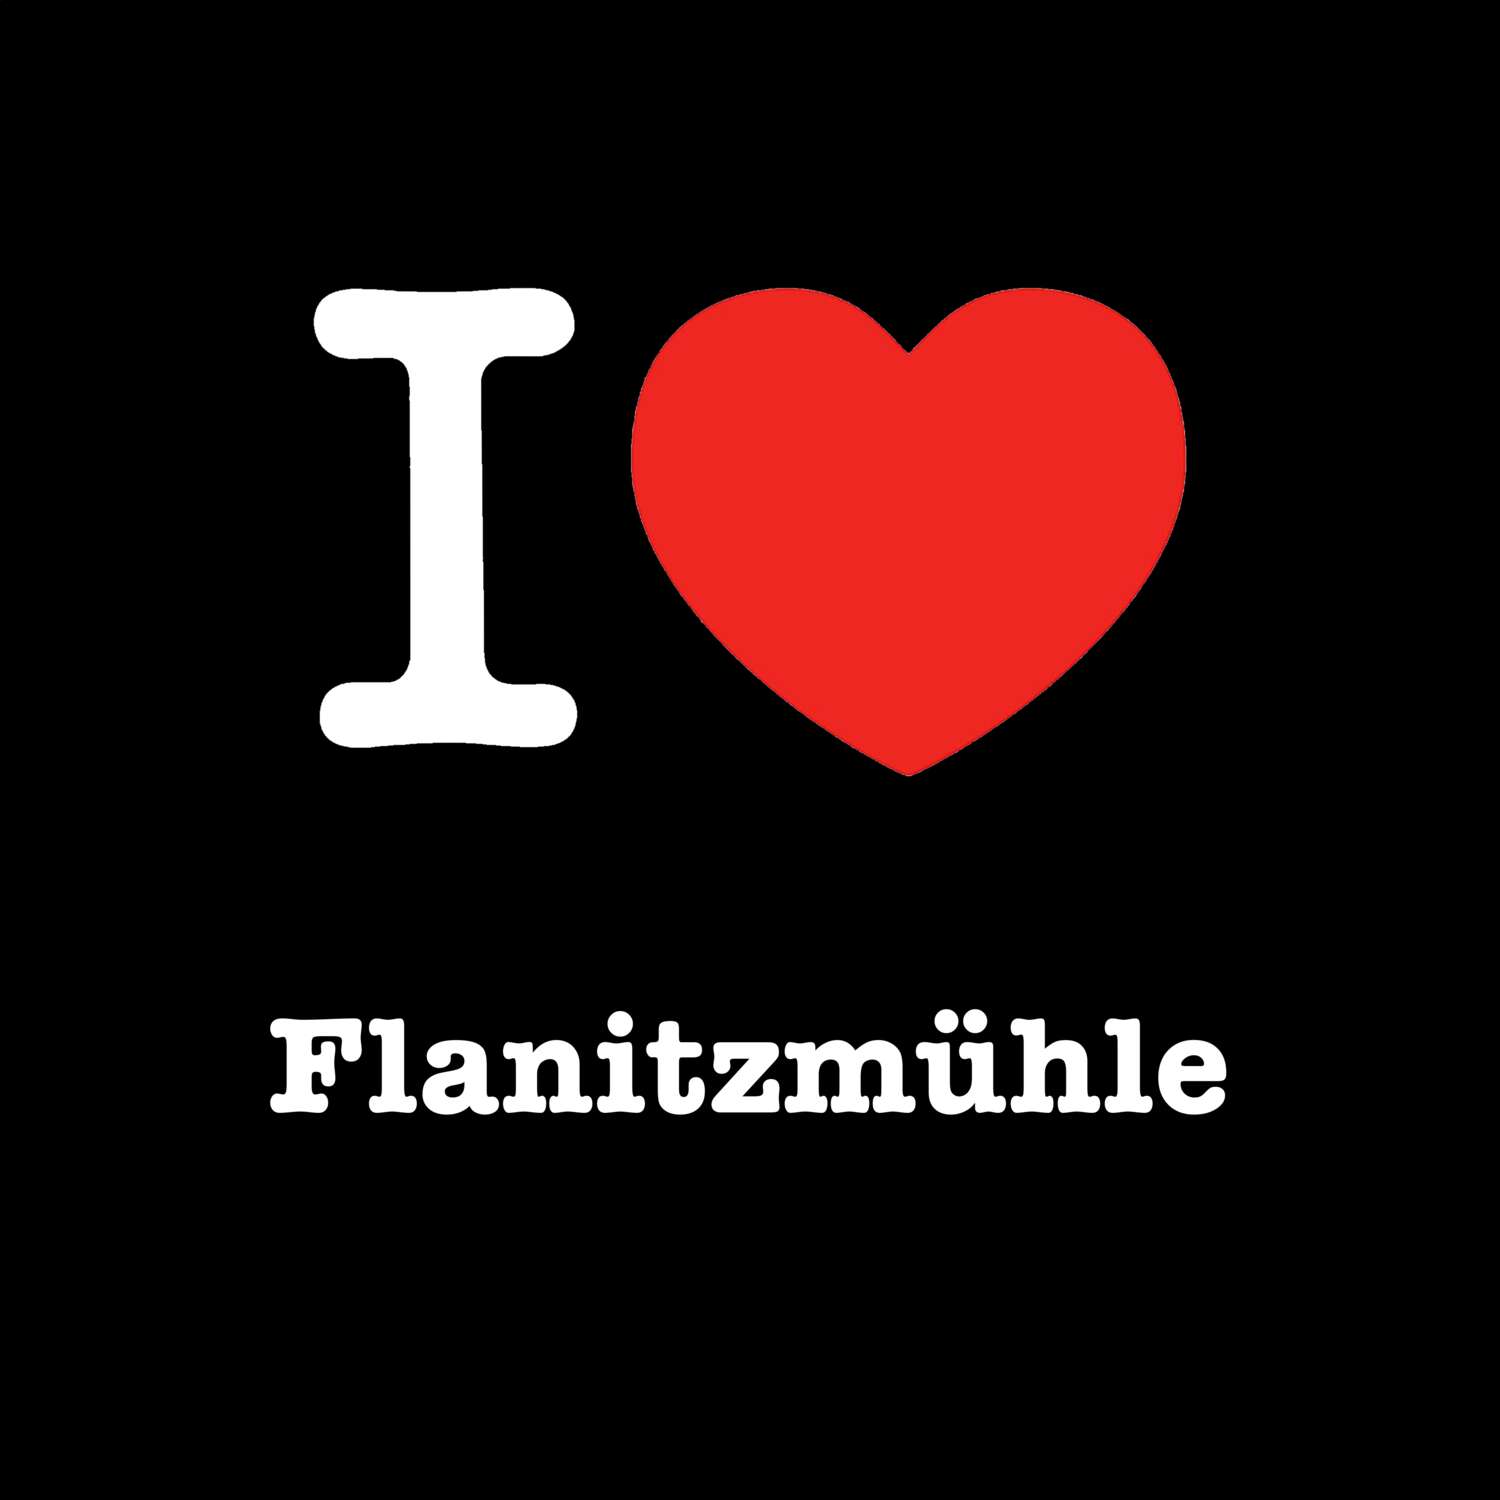 Flanitzmühle T-Shirt »I love«